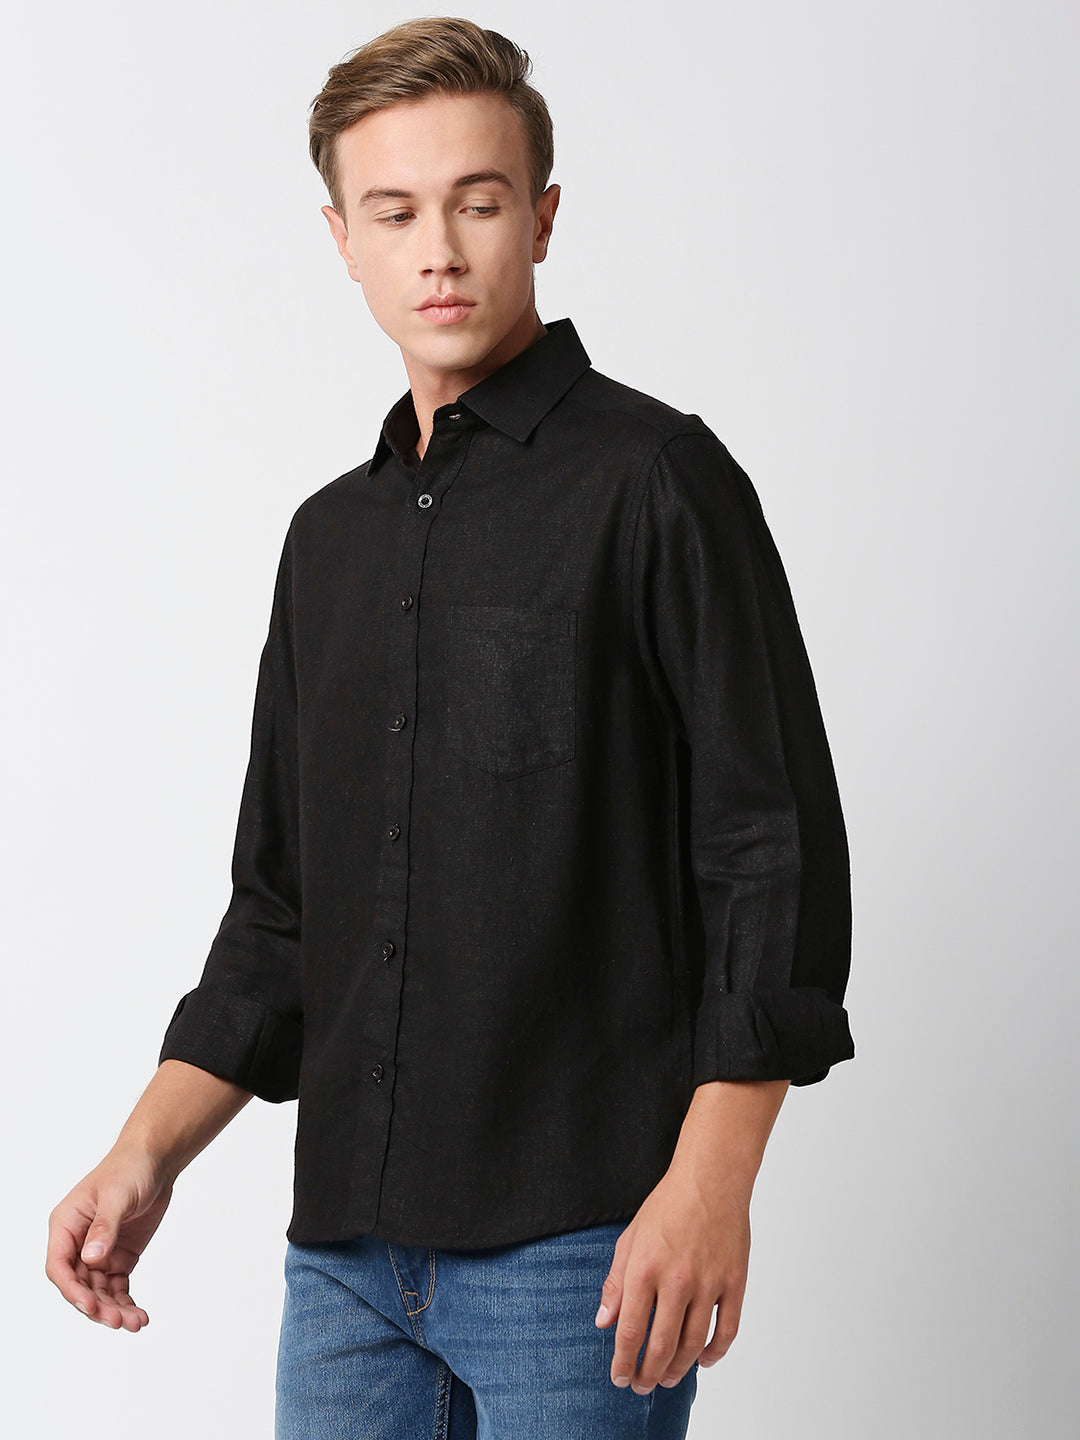 Noche Hemp Bamboo Black Long Sleeve Shirt